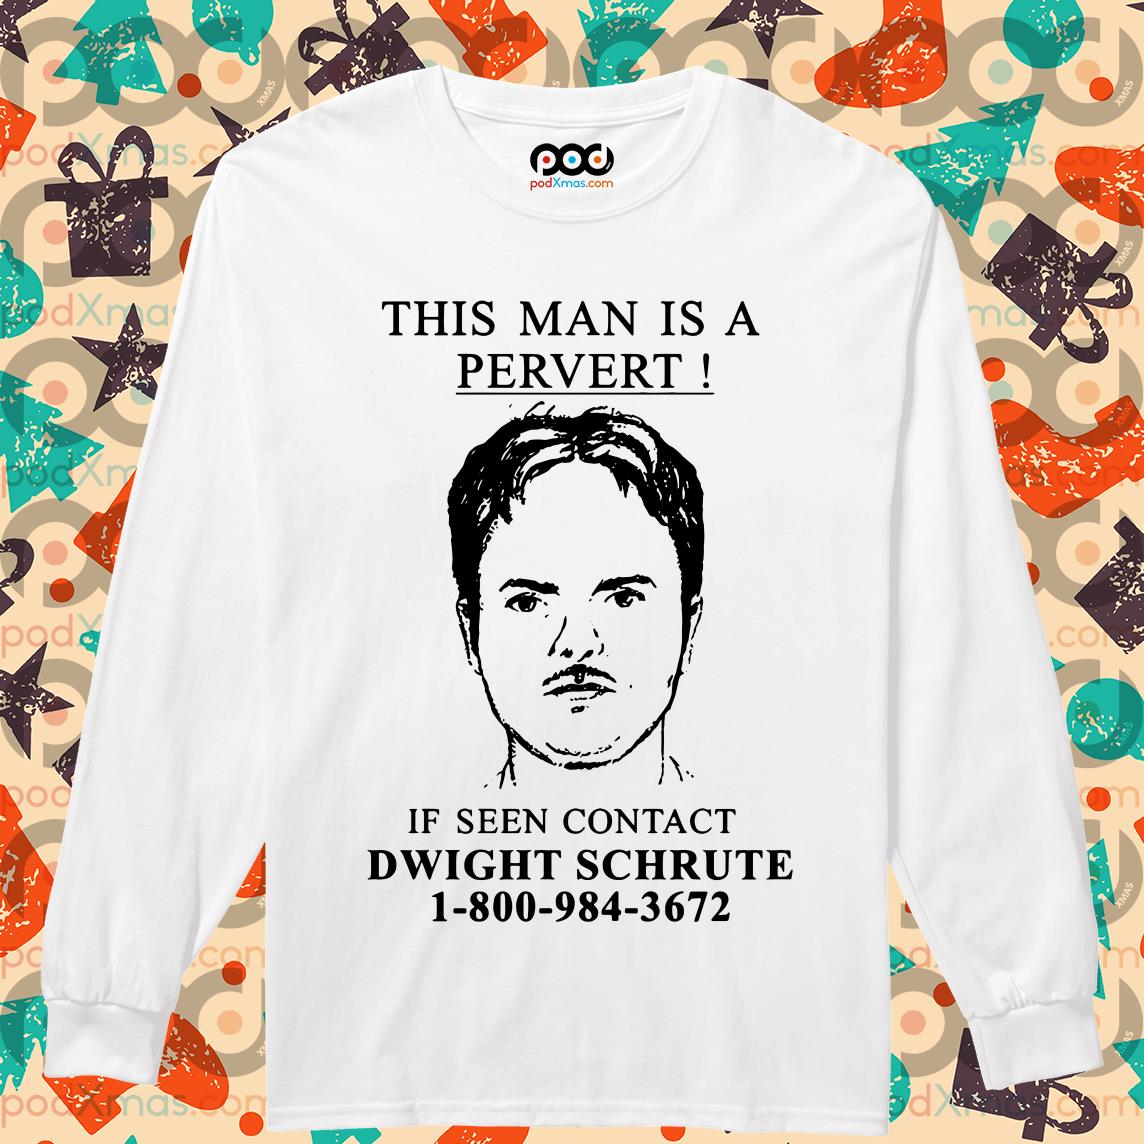 The Office Dwight Shirt 20oz Ceramic Mug